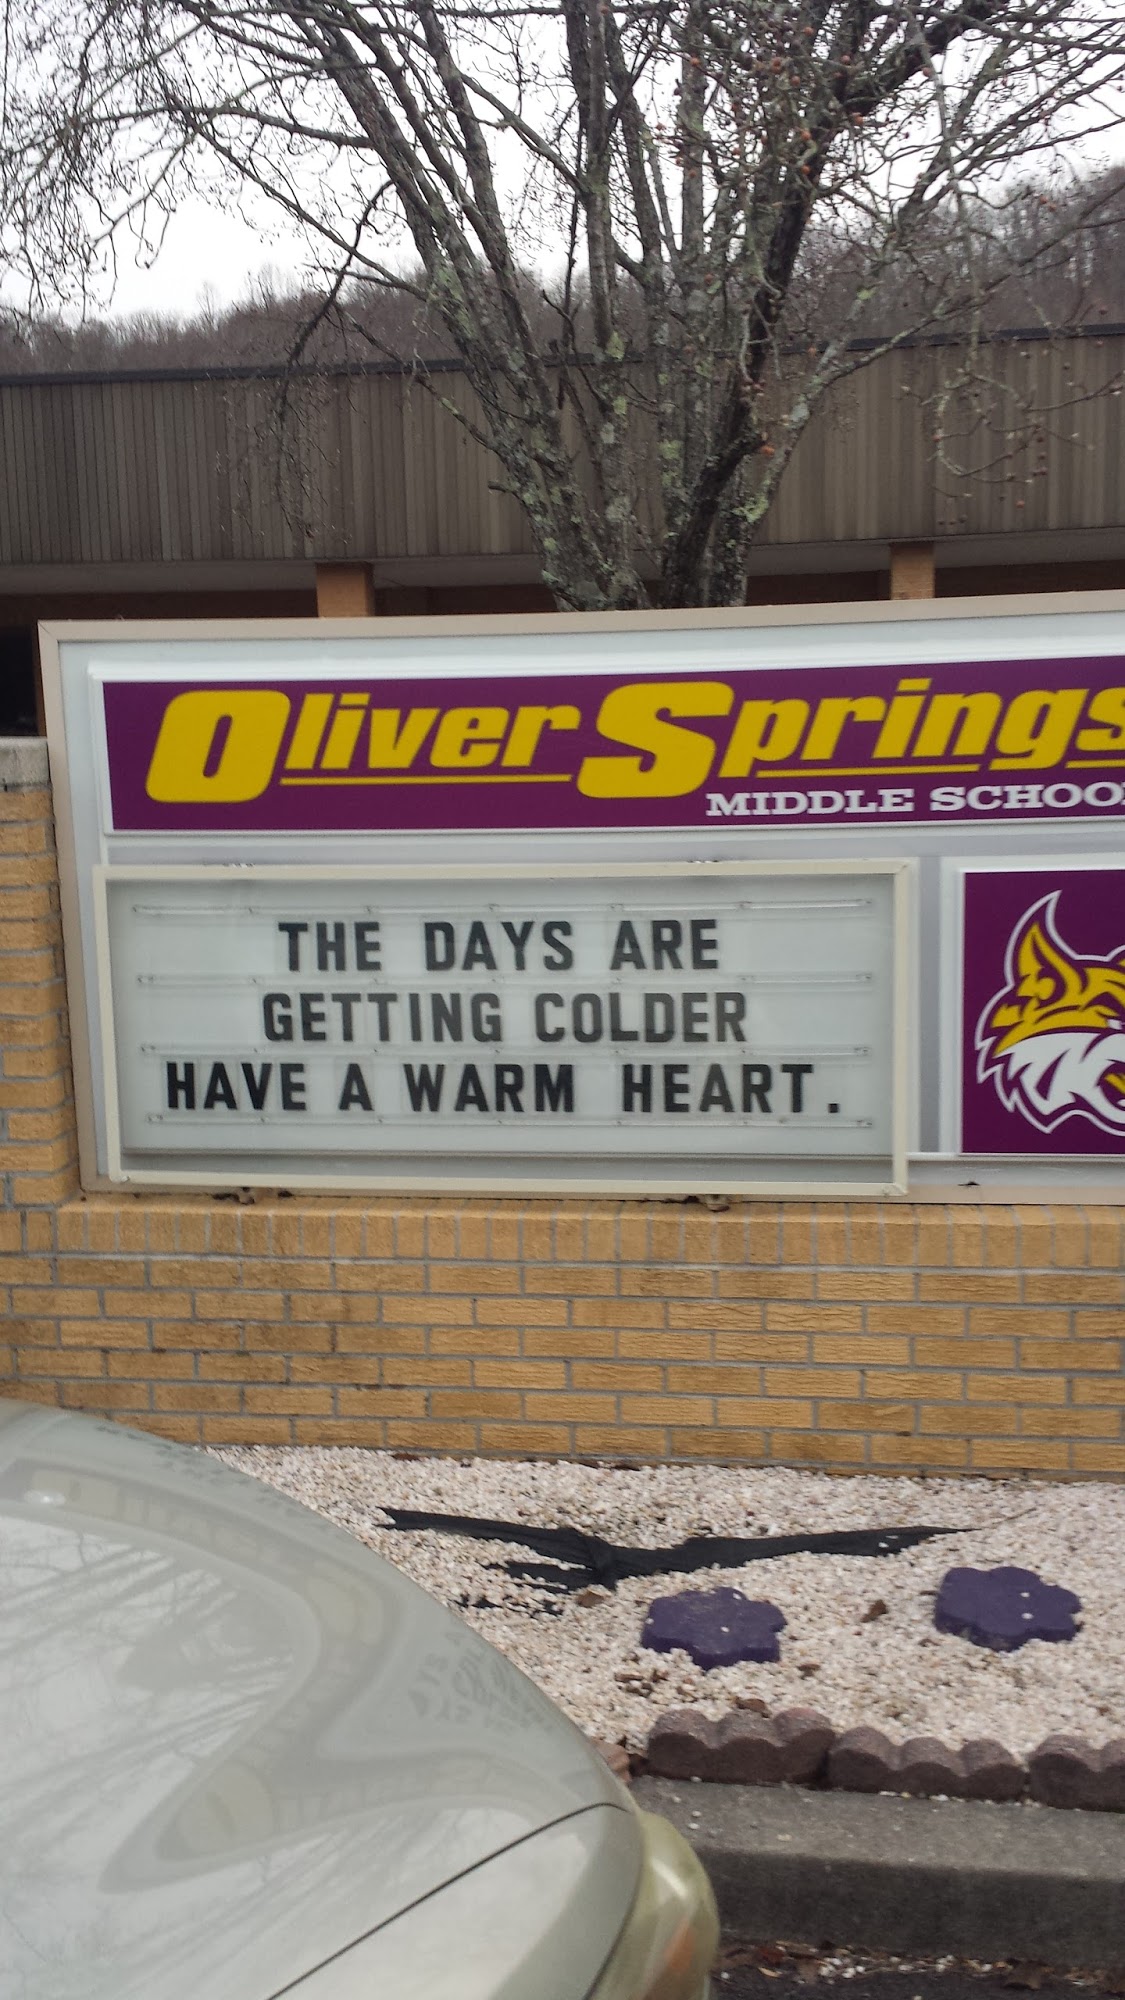 Oliver Springs Middle School